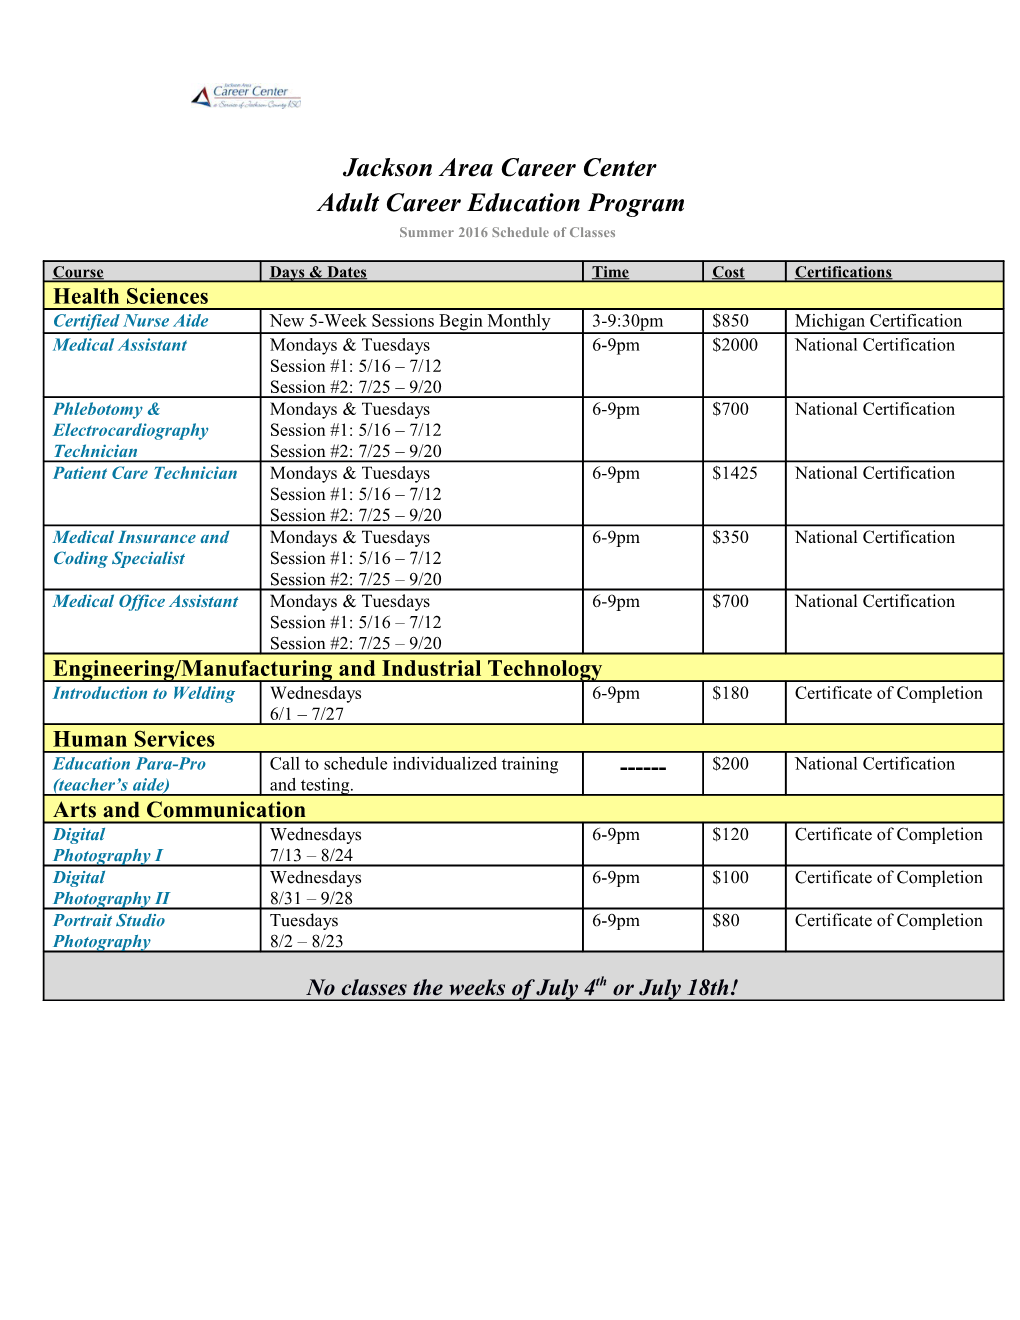 Jackson Area Career Center Adult Career Education Program Summer 2016 Schedule of Classes